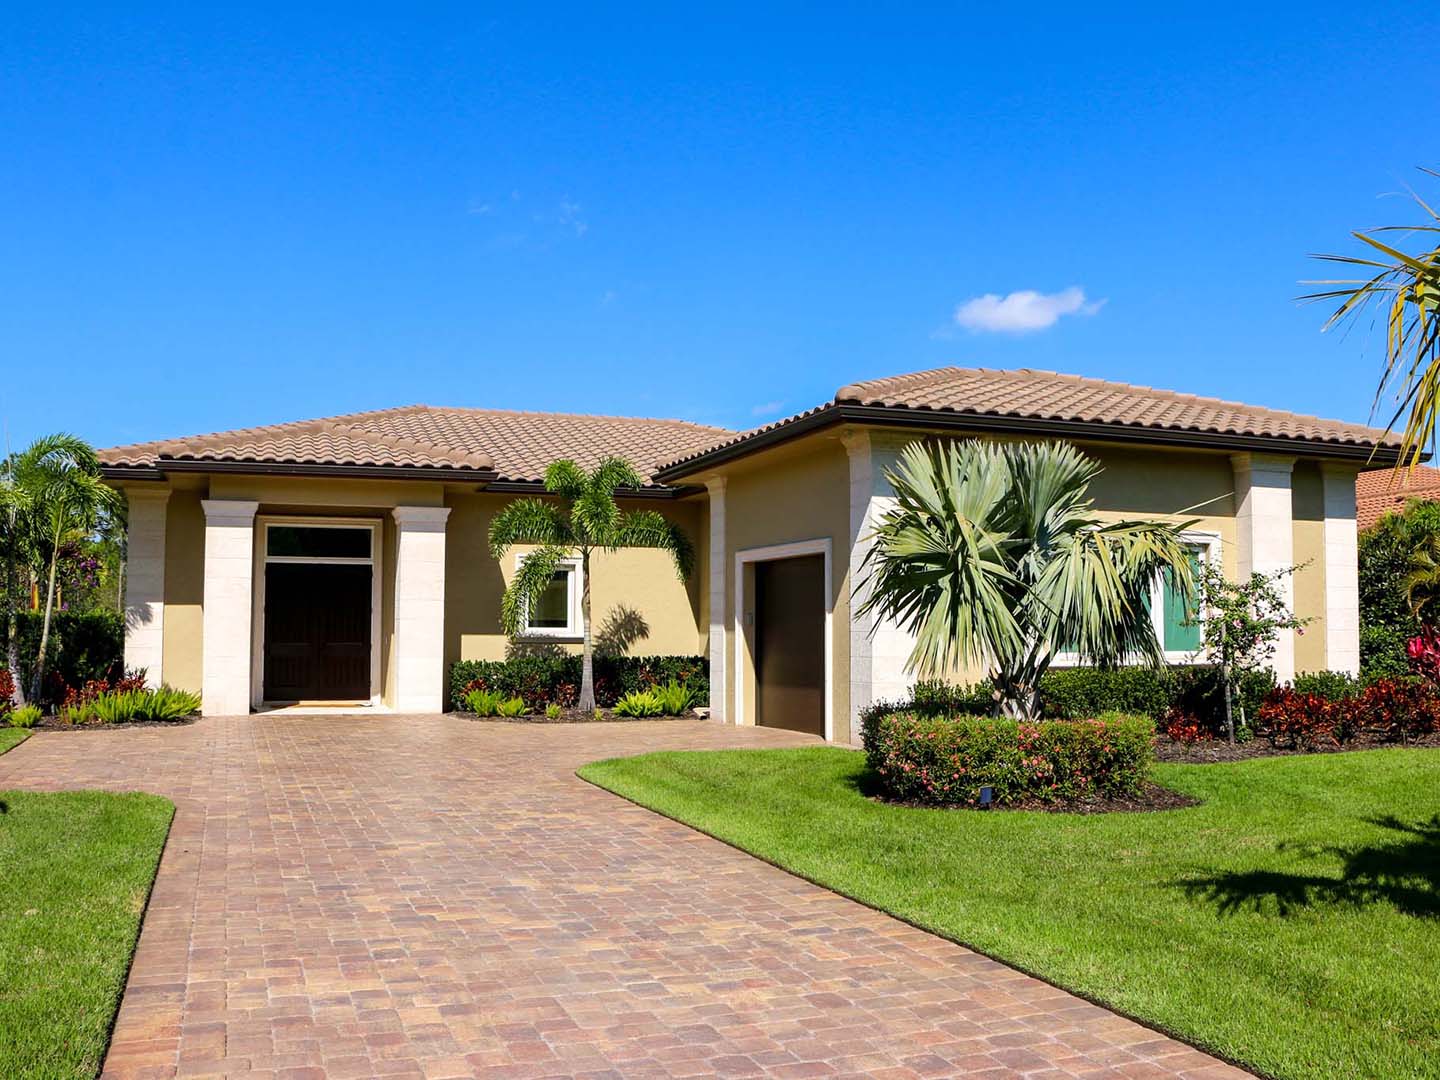 Home additions in Sarasota Florida